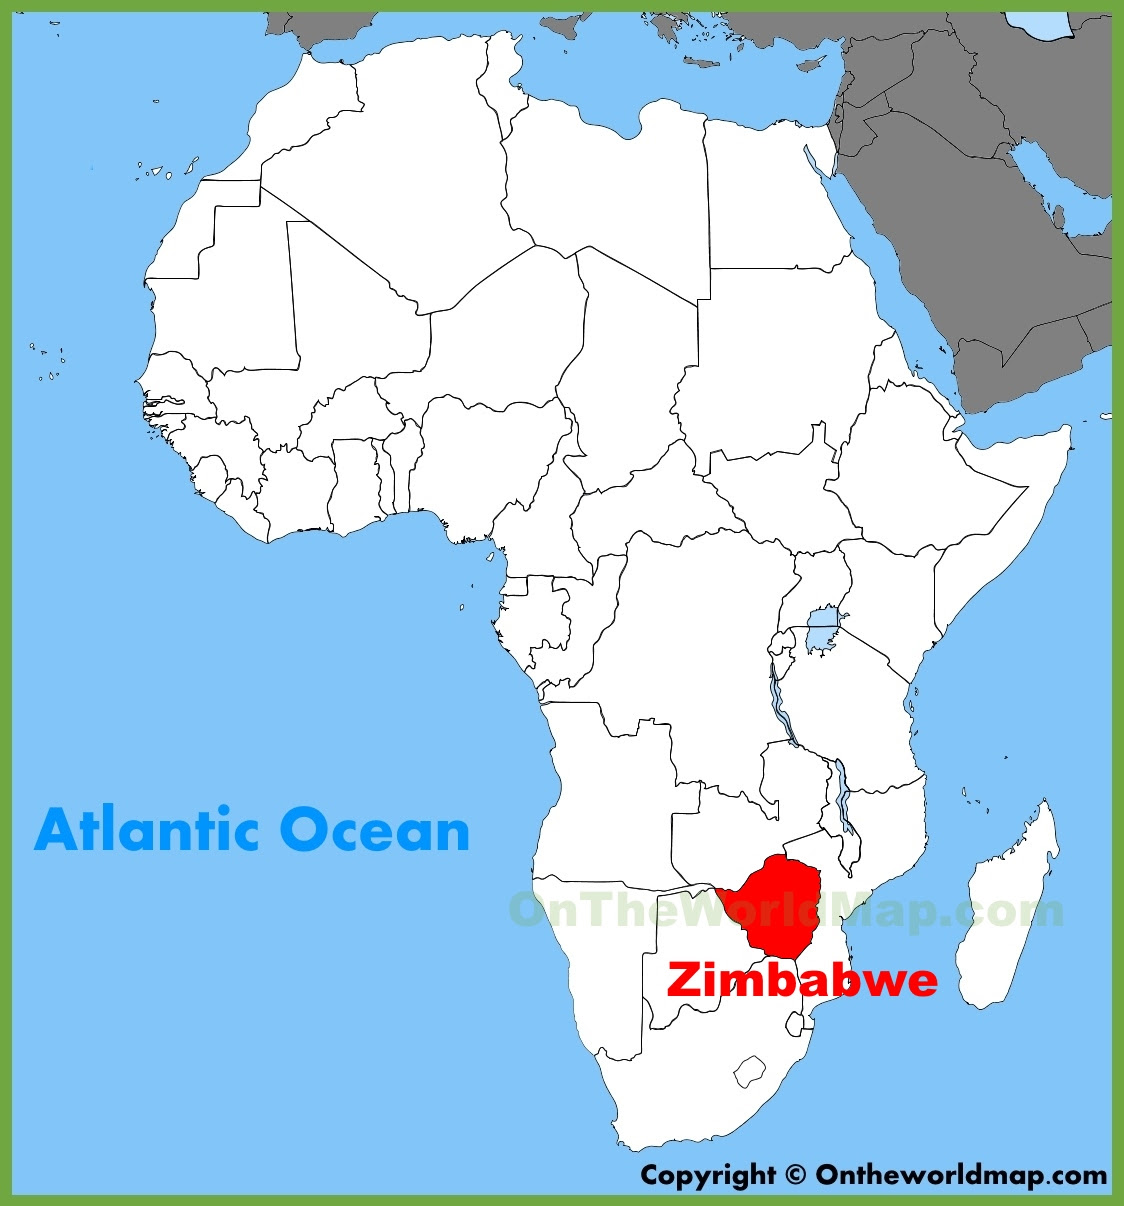 zimbabwe on map of africa Jungle Maps Map Of Africa Zimbabwe zimbabwe on map of africa